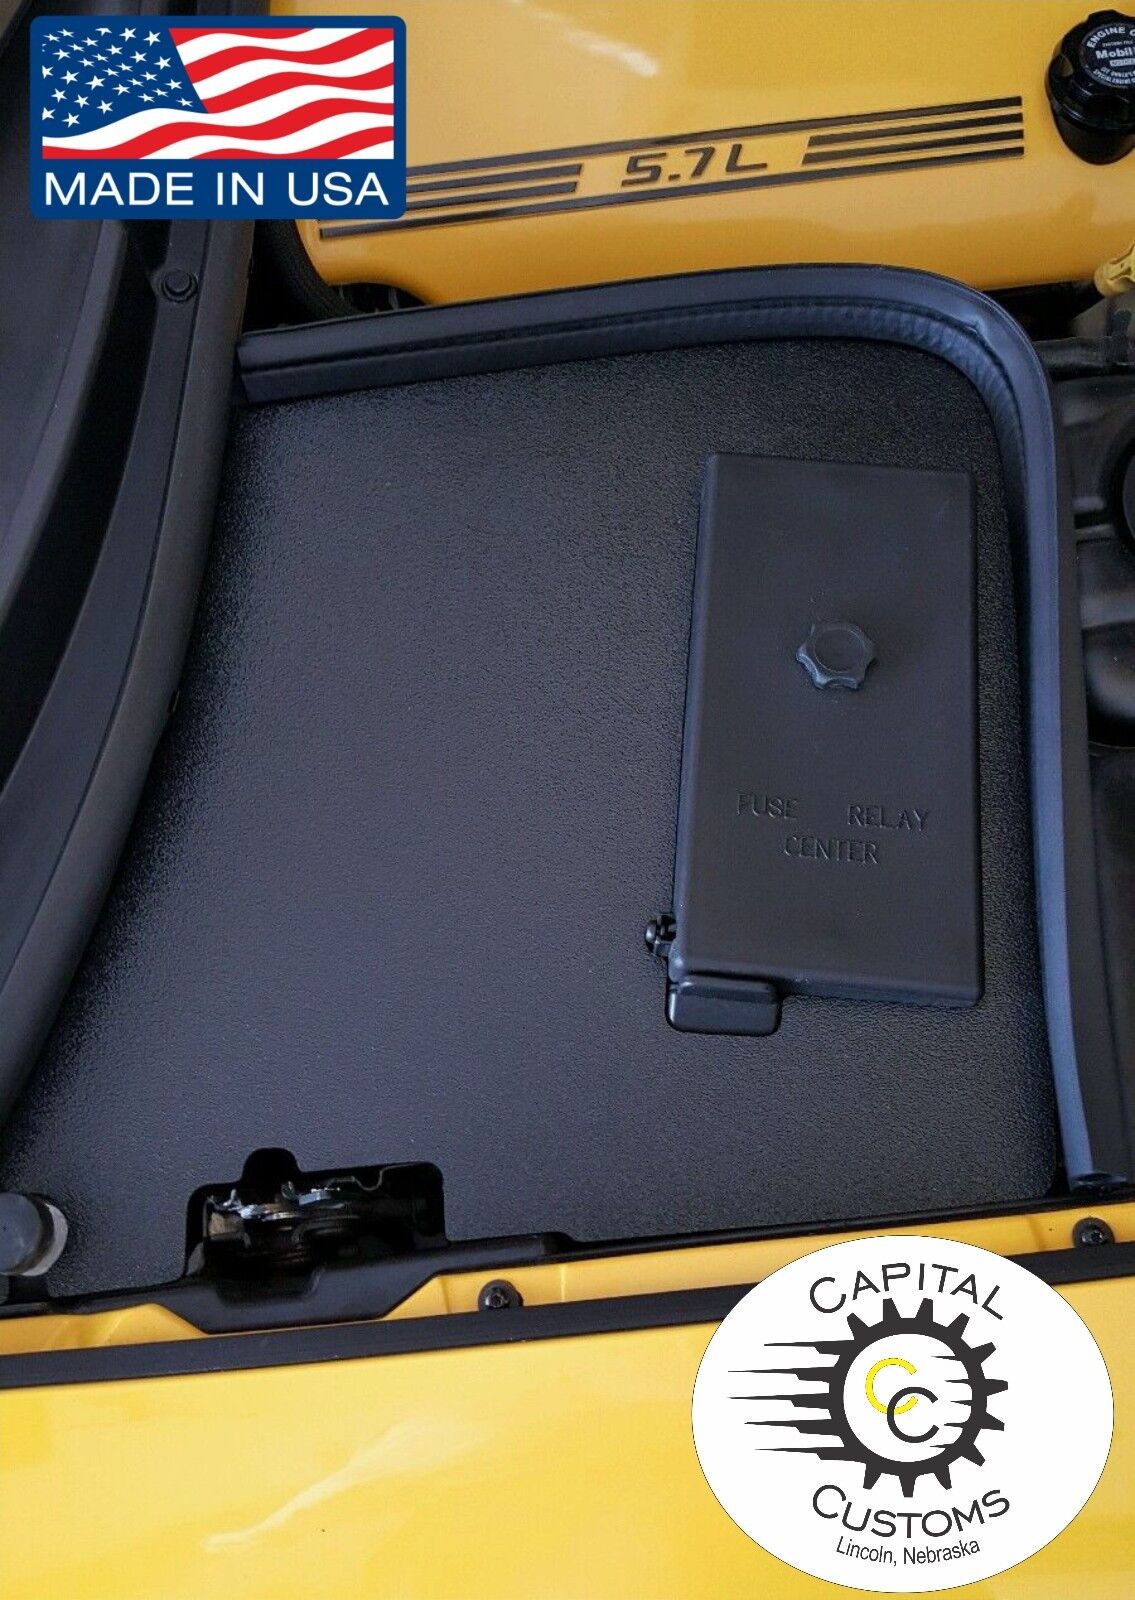 C5 Corvette battery den cover plate Free priority mail